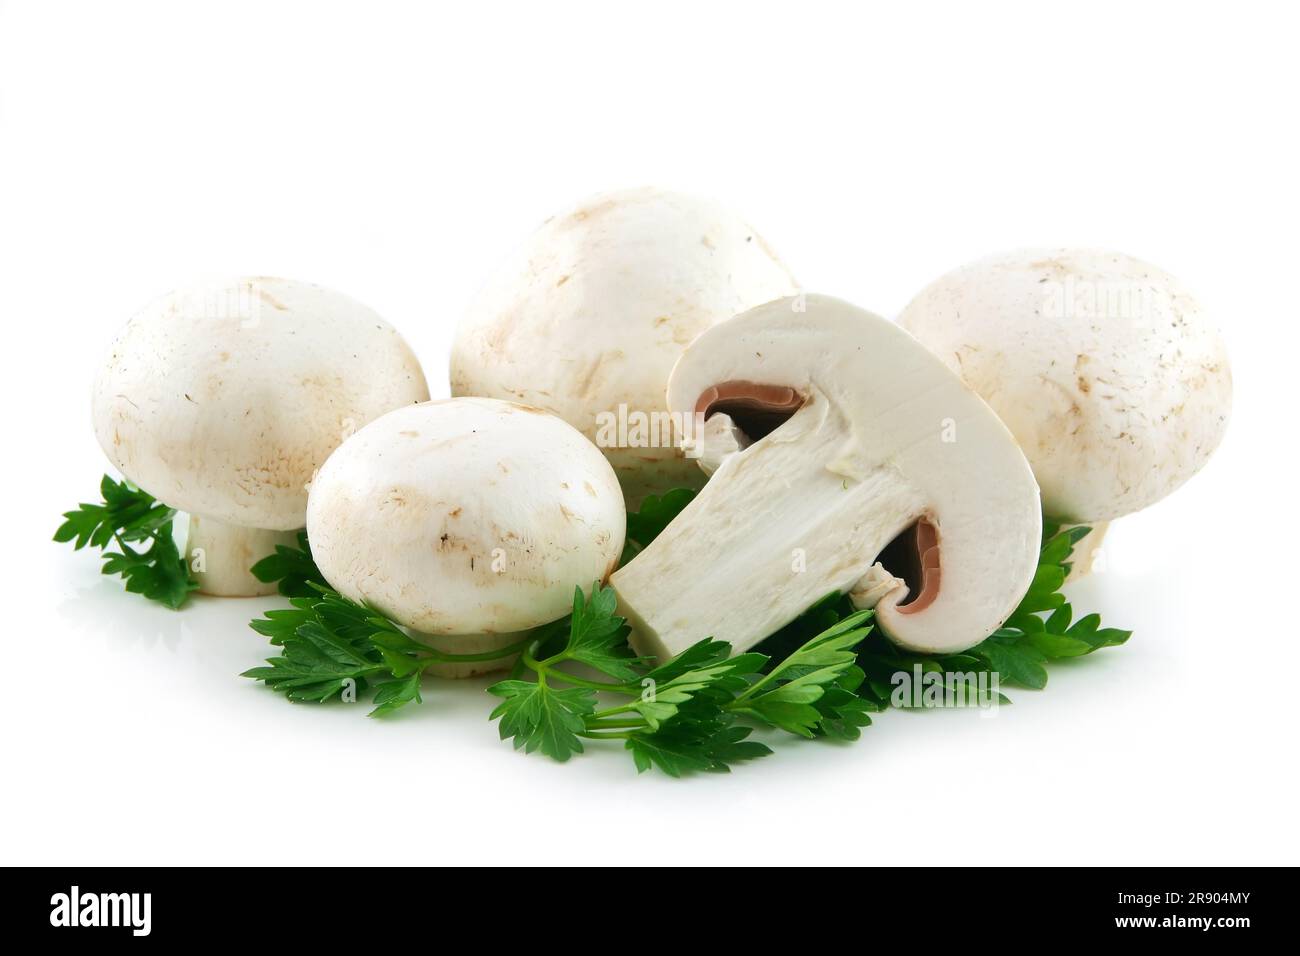 Champignon Mushrooms and Parsley Isolated on White Background Stock Photo